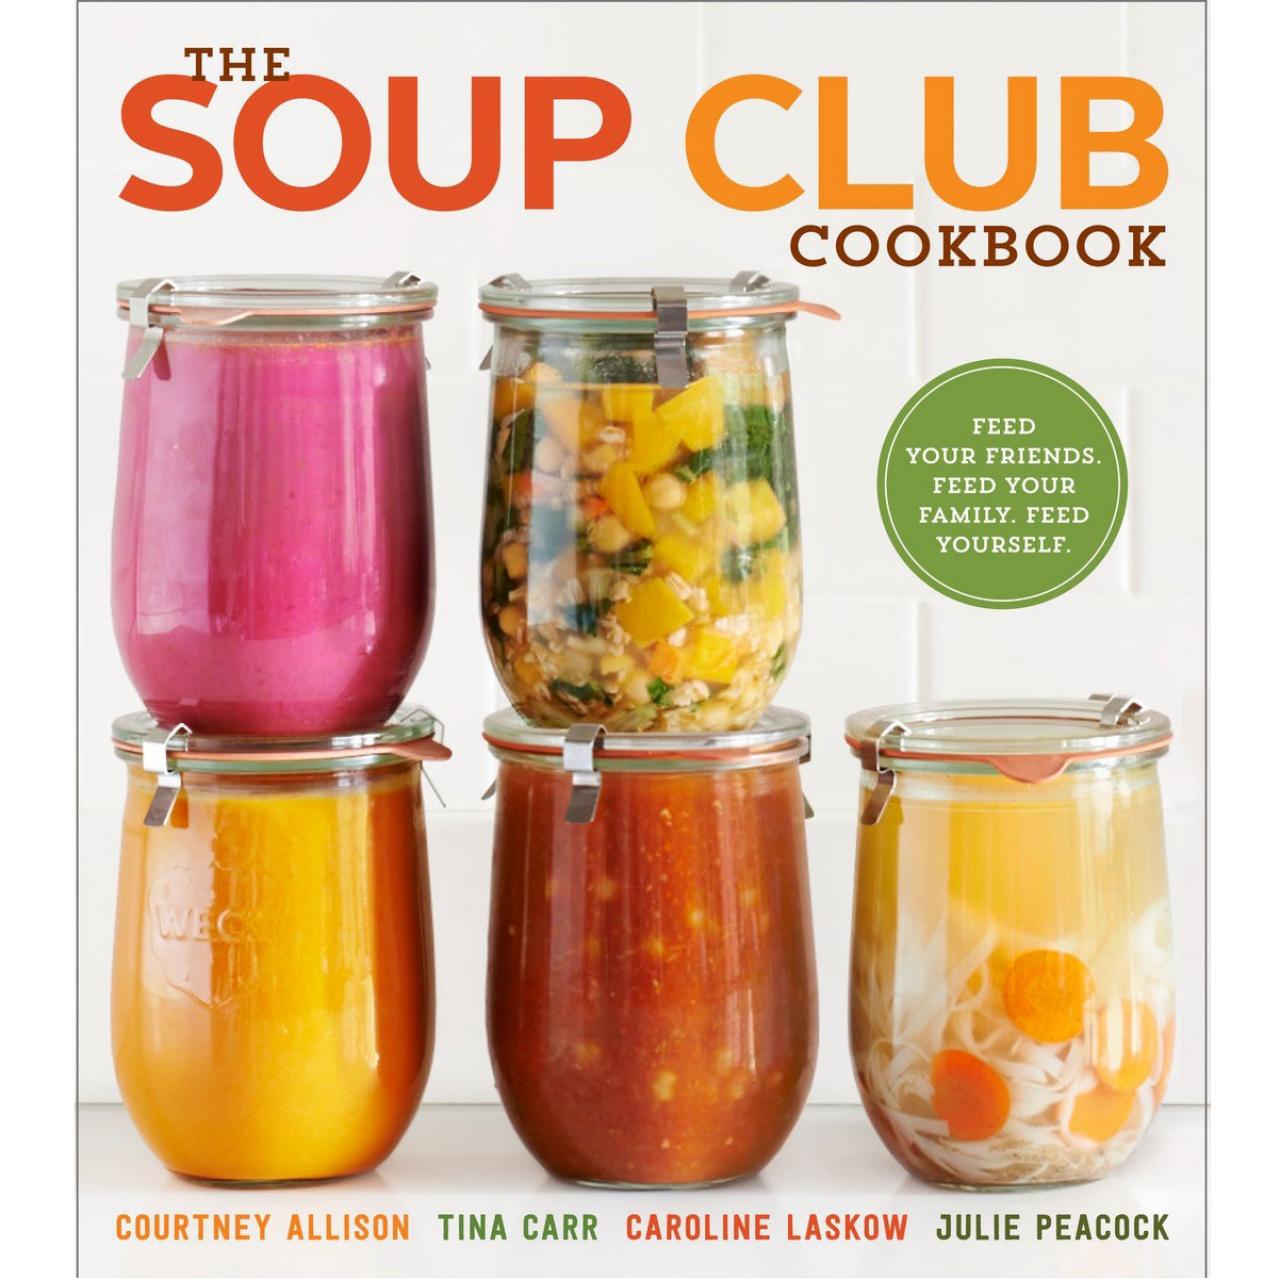 https://food.fnr.sndimg.com/content/dam/images/food/fullset/2015/1/5/0/fnd_the-soup-club-cookbook-cover-off-the-shelf.jpg.rend.hgtvcom.1280.1280.suffix/1420477013201.jpeg